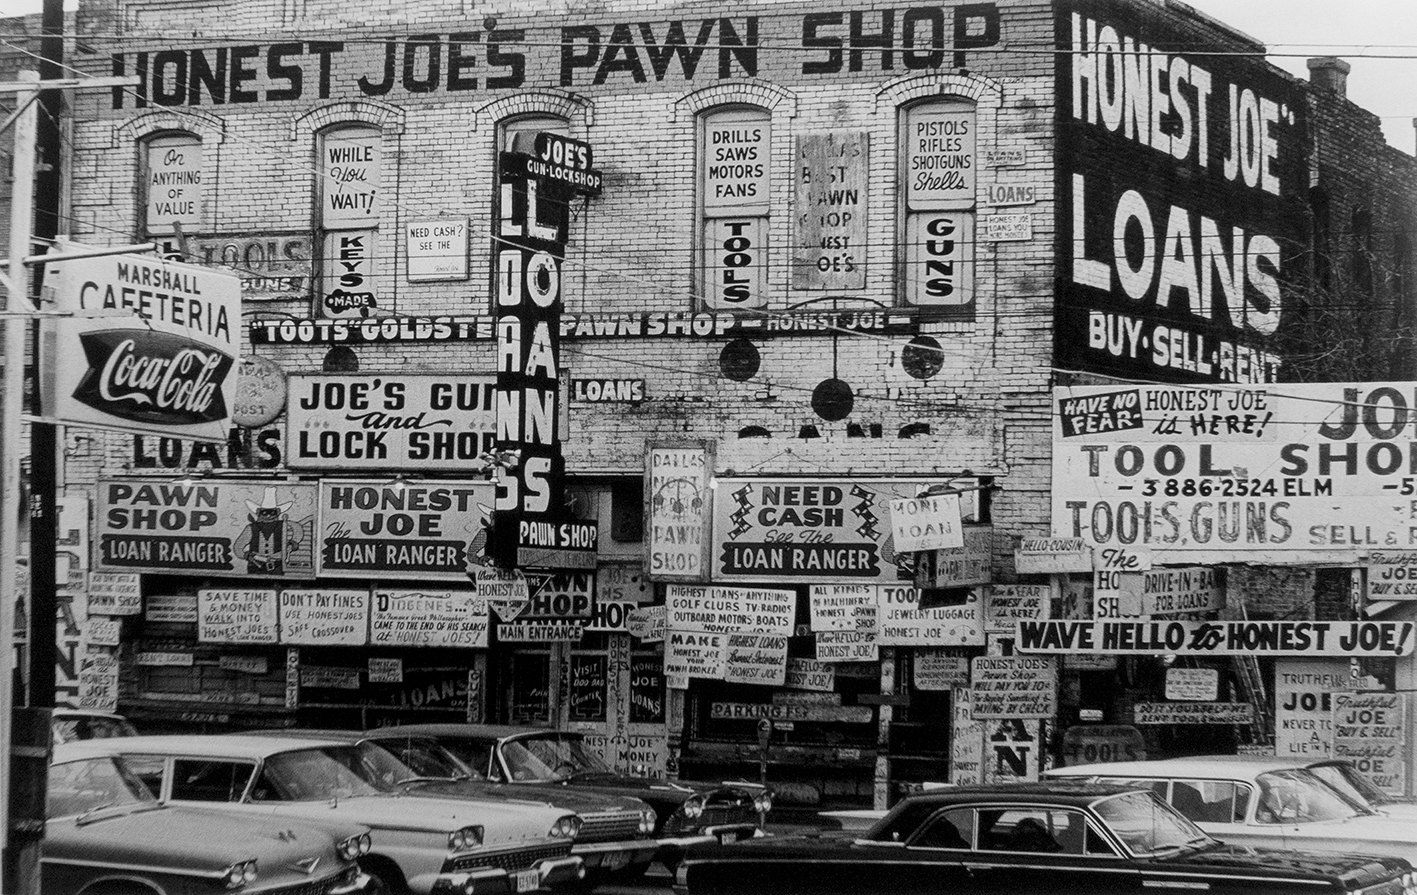 Honest Joes Pawn Brokers shop, Dallas Texas 1963 © Thomas Hoepker